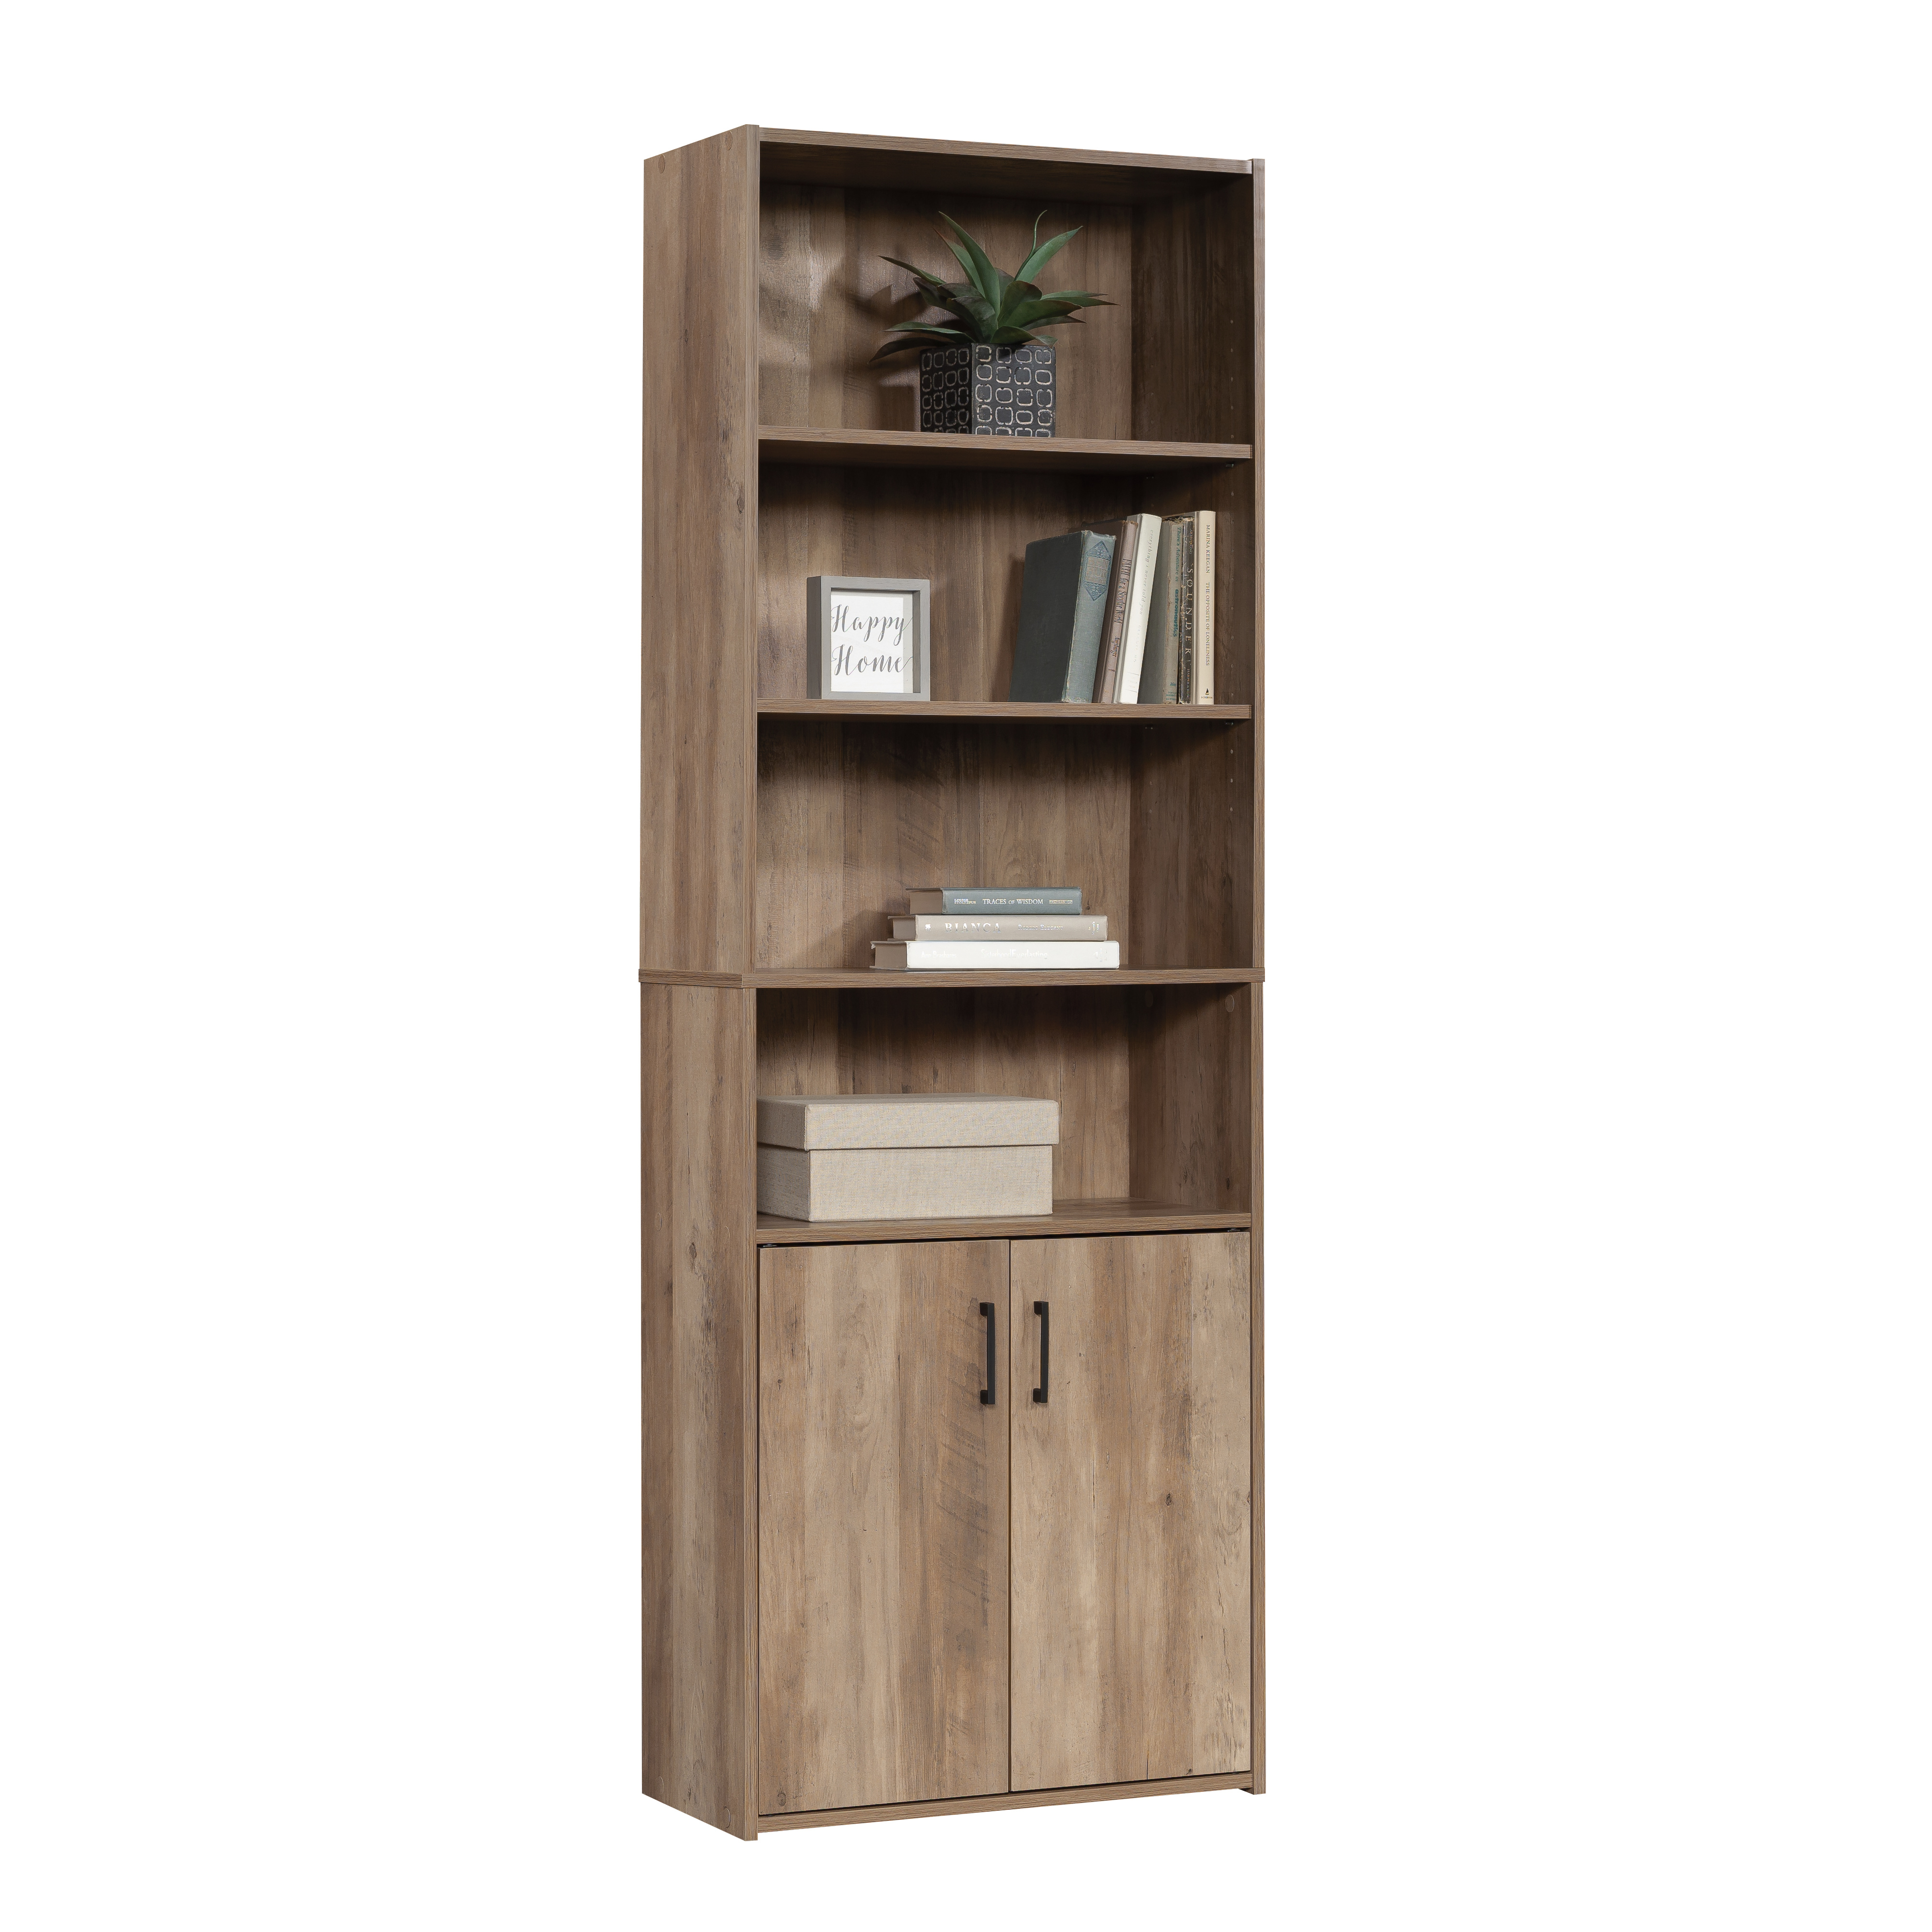 Mainstays Traditional 5 Shelf Bookcase with Doors, Weathered Oak Finish - image 4 of 10